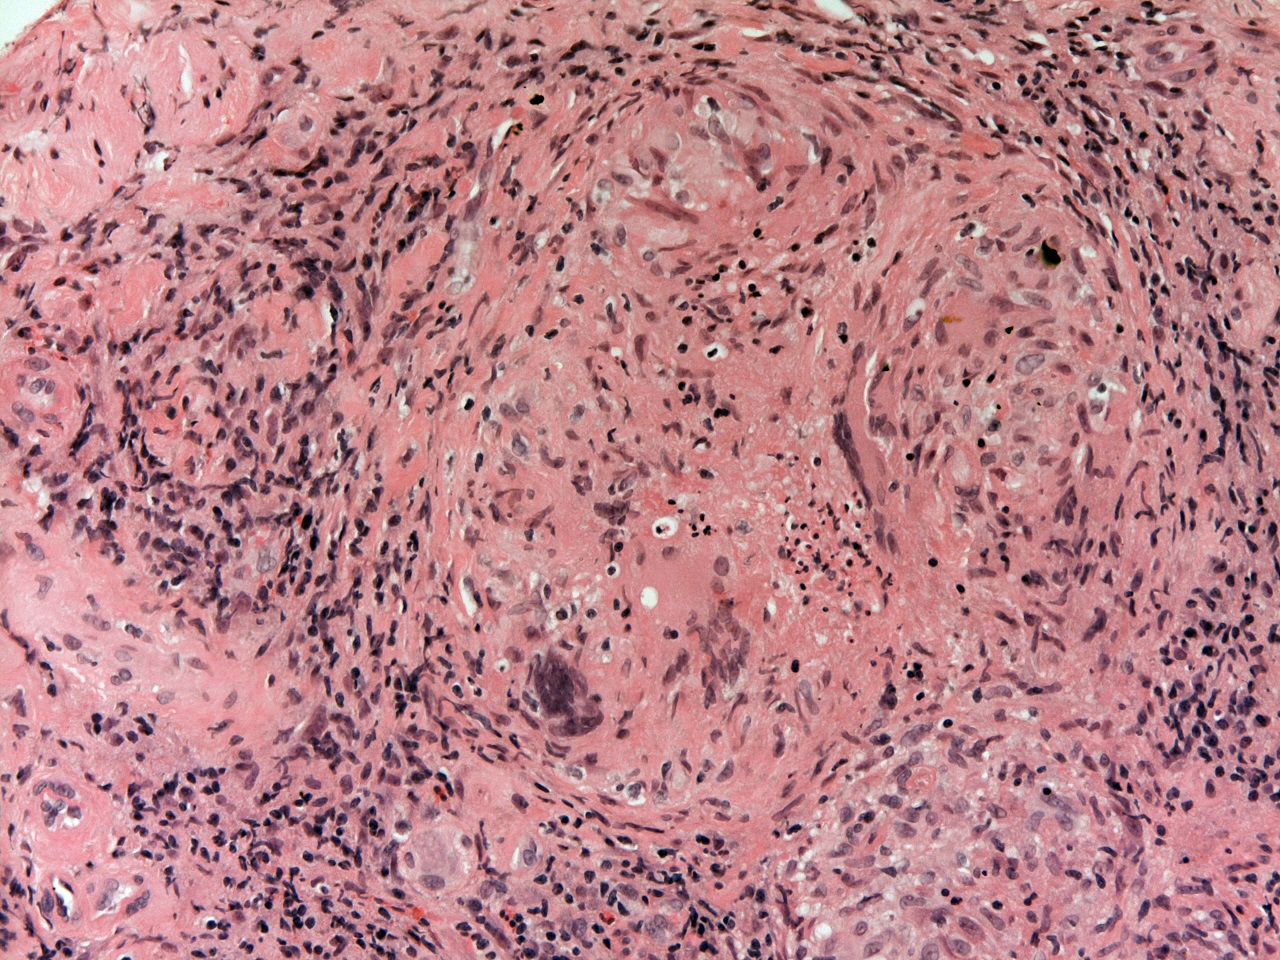 Granuloma with necrosis